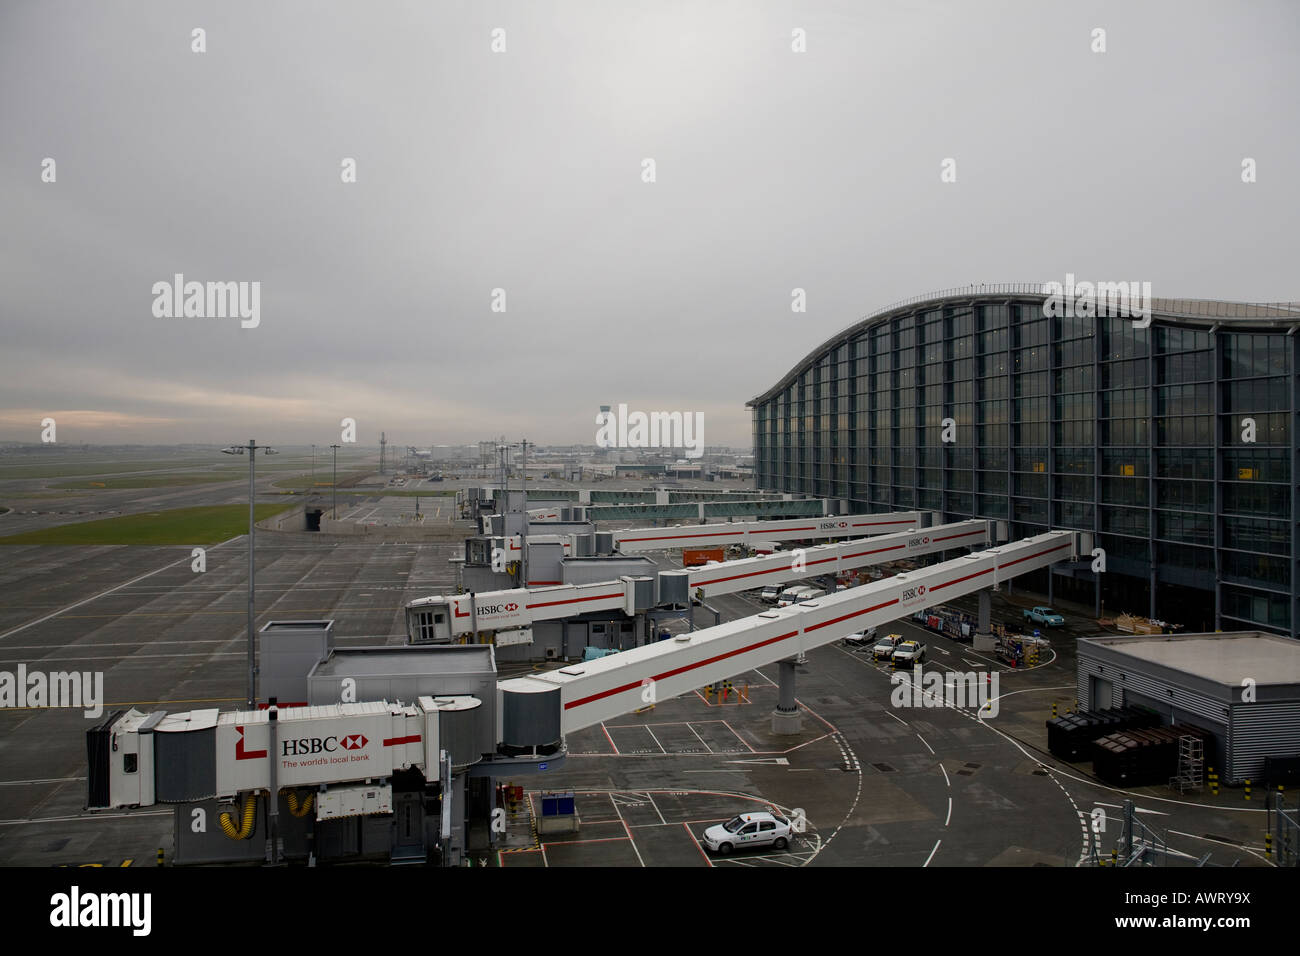 London Heathrow Airport Terminal 5 dedicated to service British Airways Stock Photo